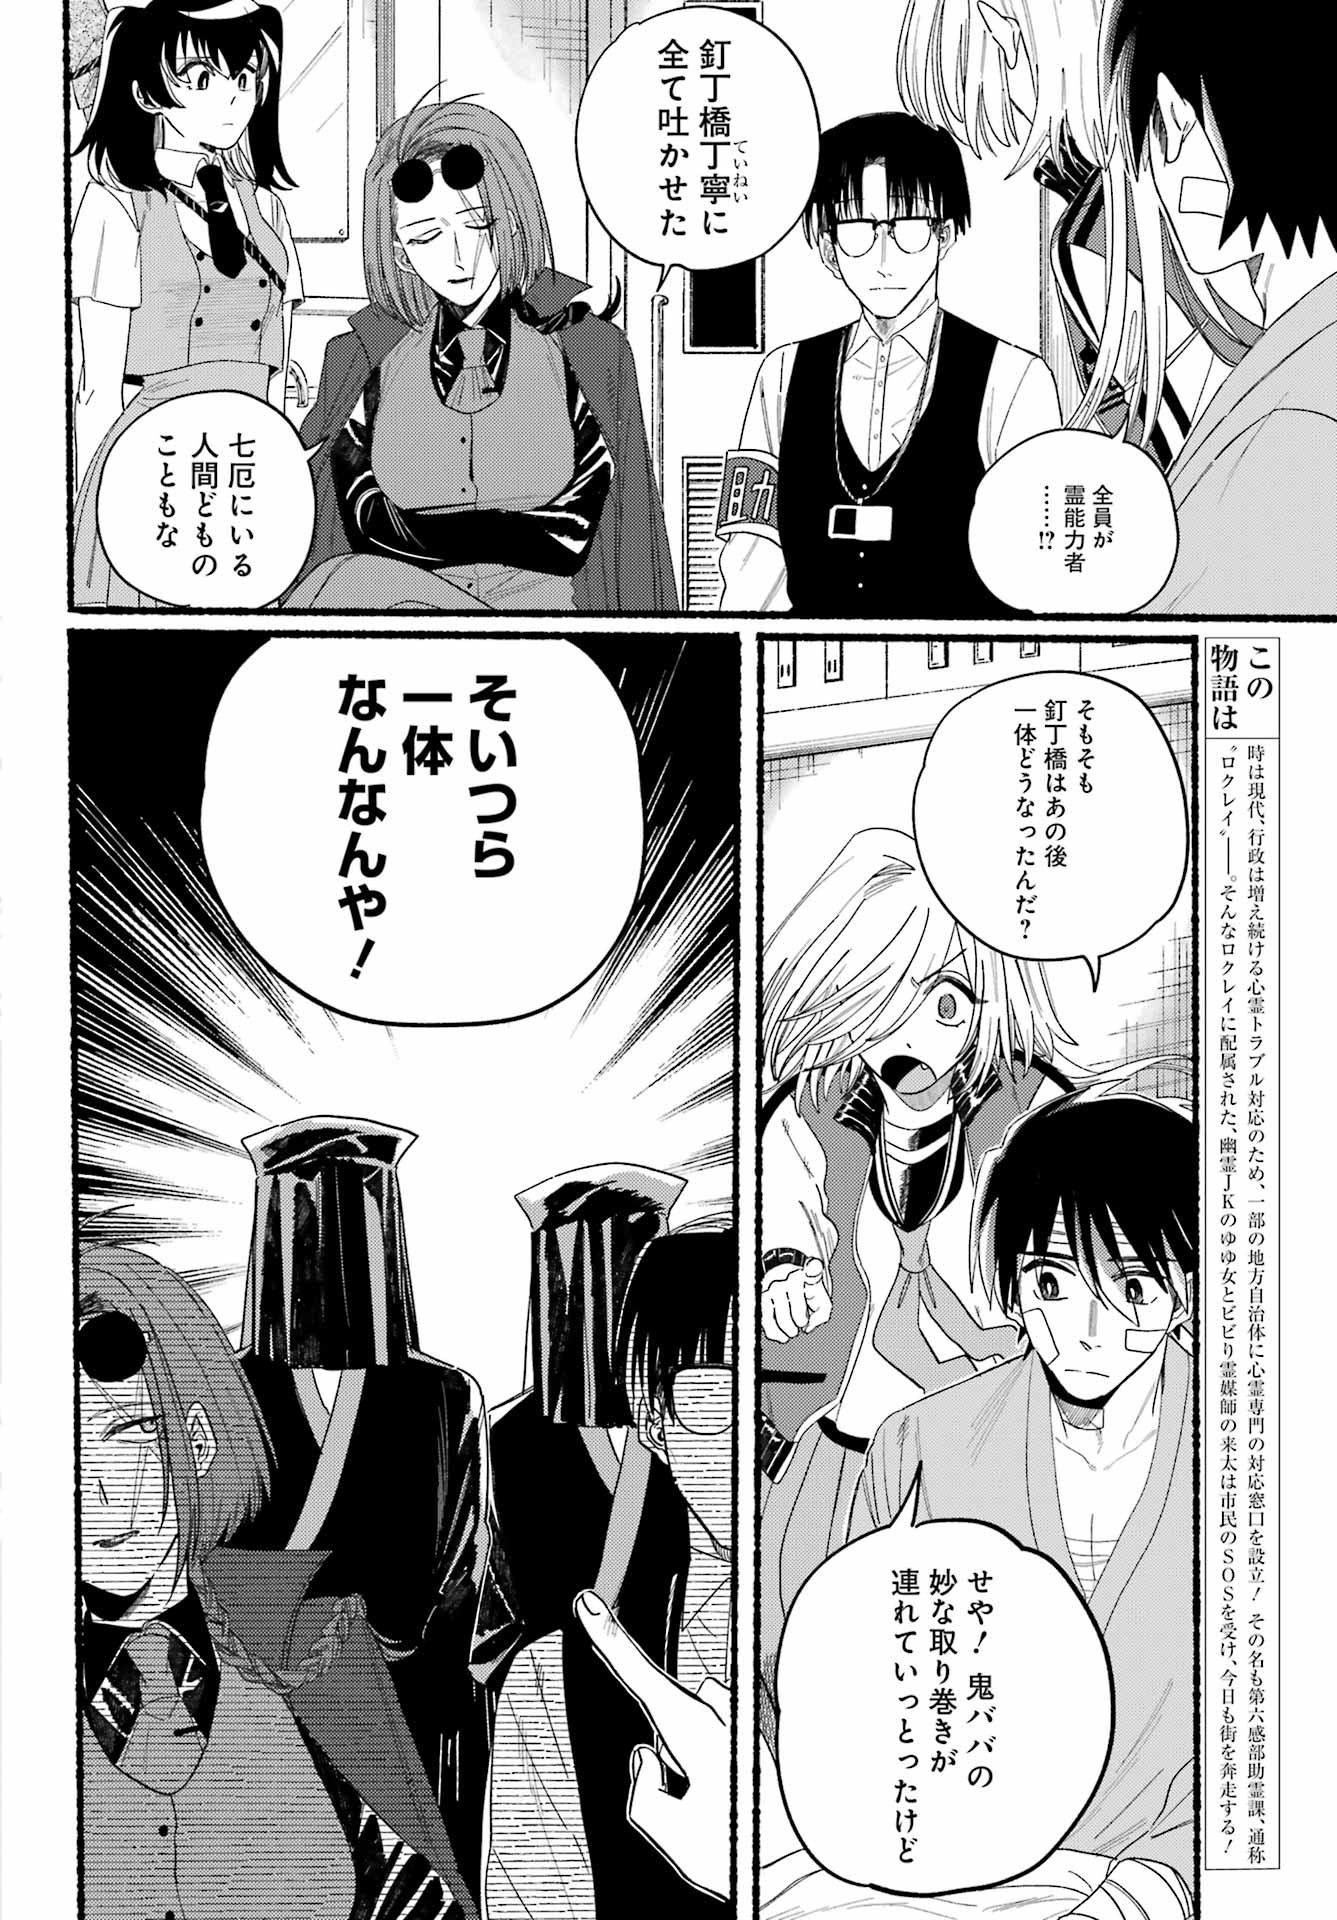 Rokurei - Tenseishi Rinne Kuyakusho Dairokkanbu Joreika Katsudouki - Chapter 14 - Page 4